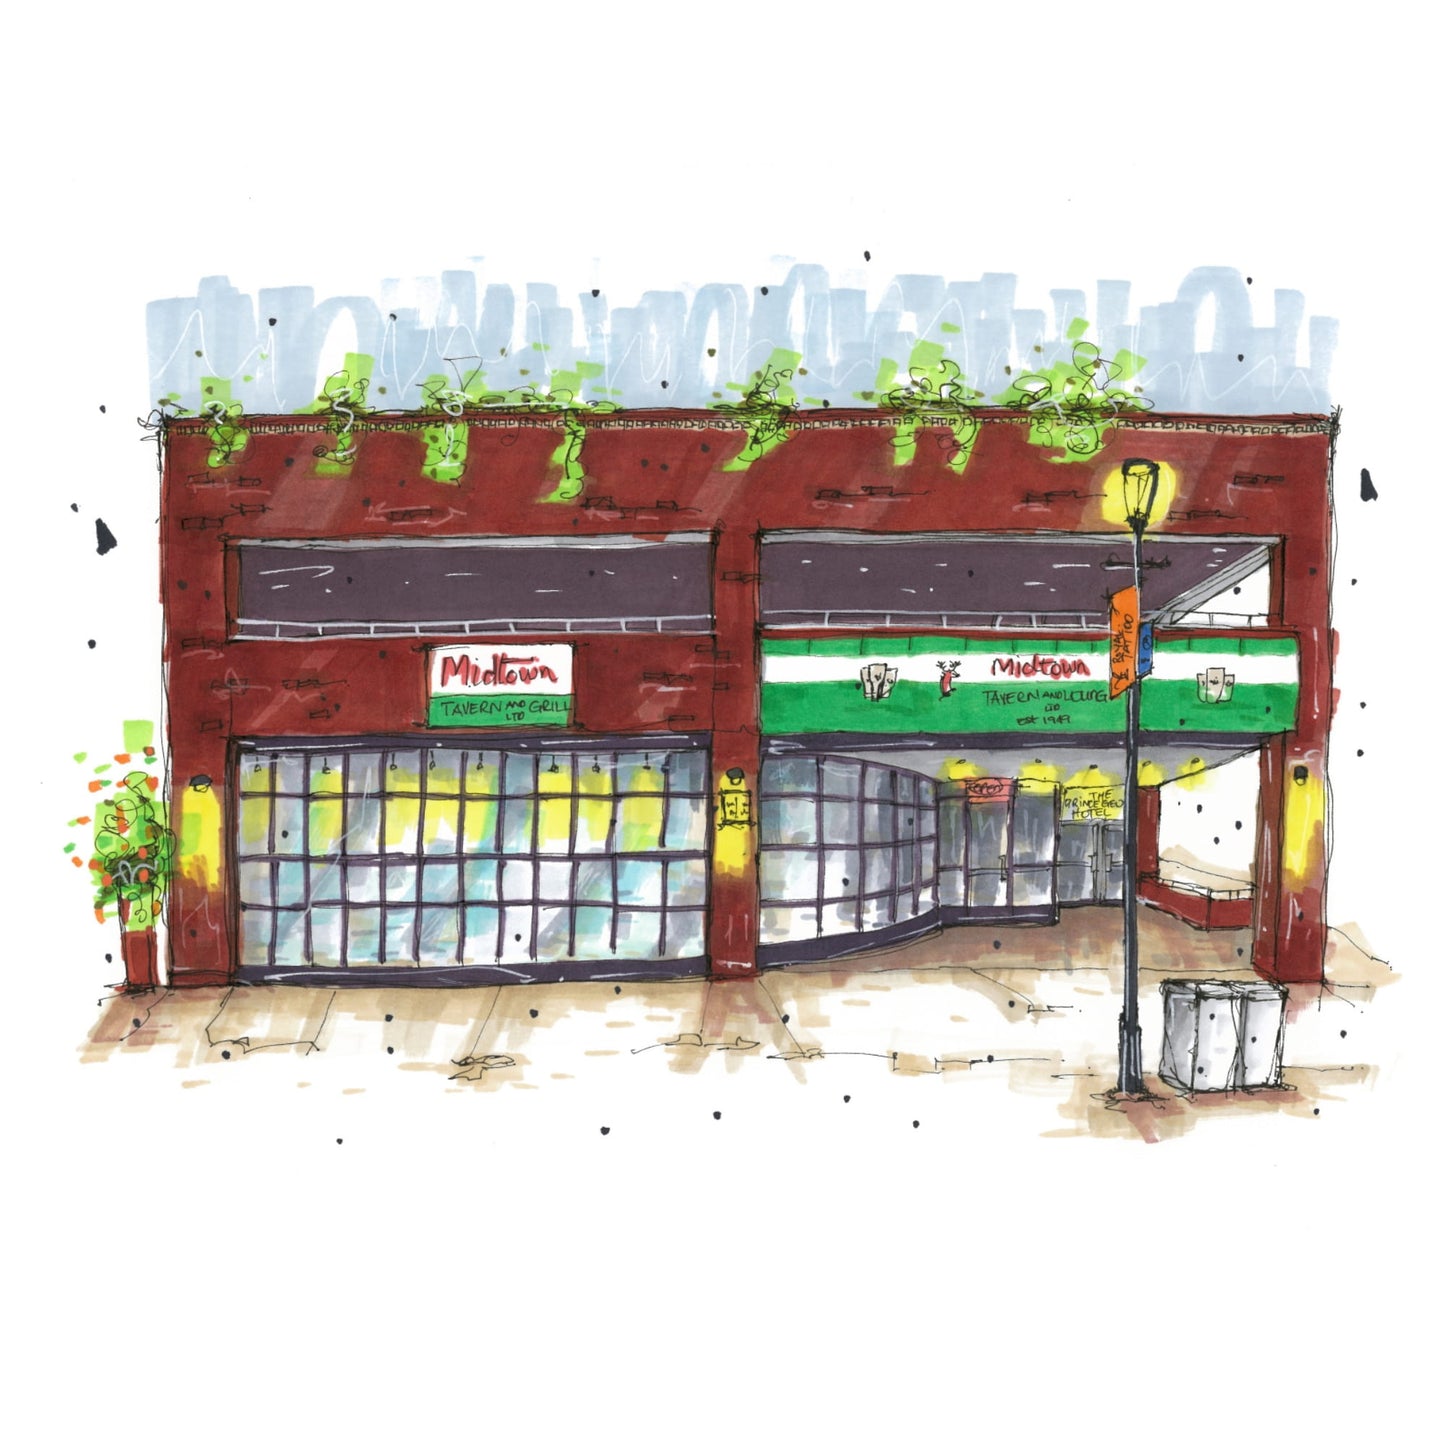 DTS0066 - Midtown Tavern, Art Print - Artwork Print Sketch 2 - Downtown Sketcher